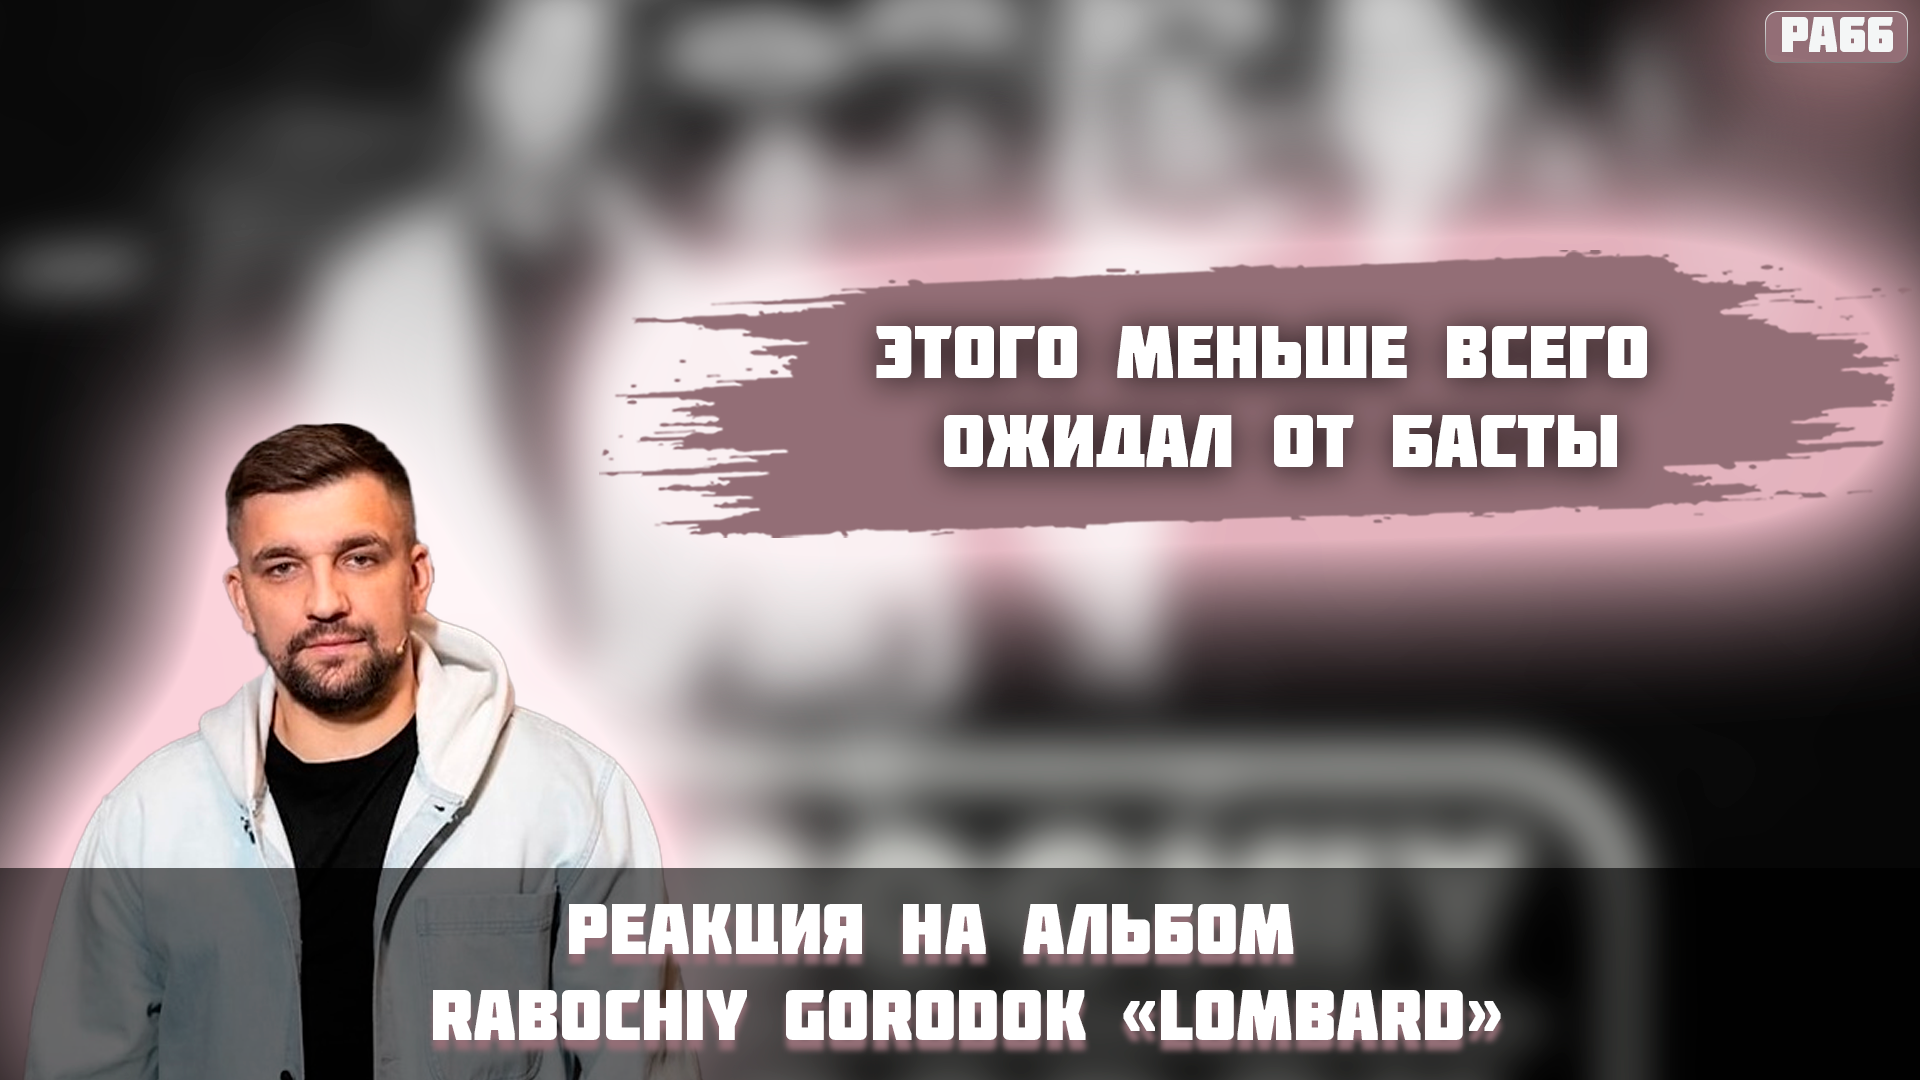 РЕАКЦИЯ НА АЛЬБОМ RABOCHIY GORODOK - " LOMBARD "